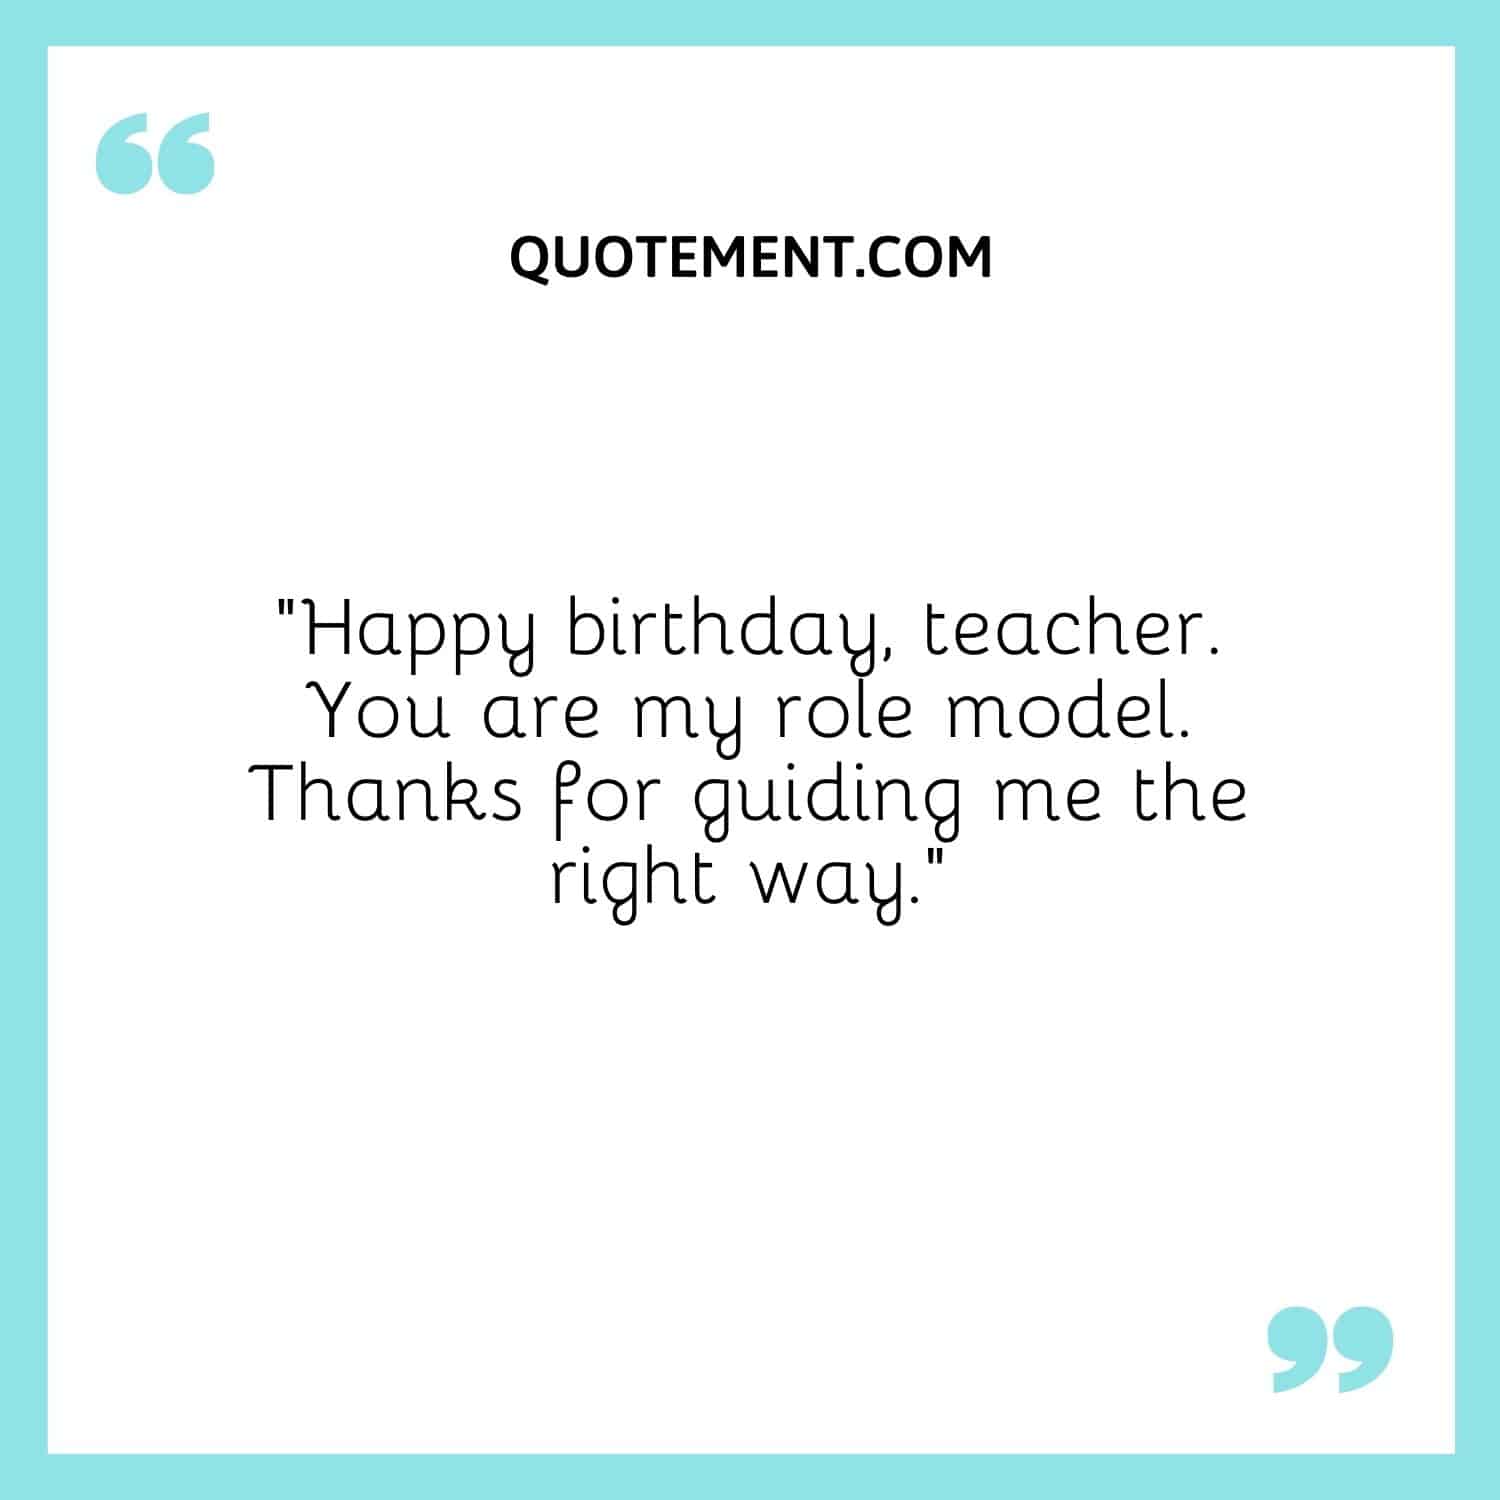 Happy birthday, teacher. You are my role model